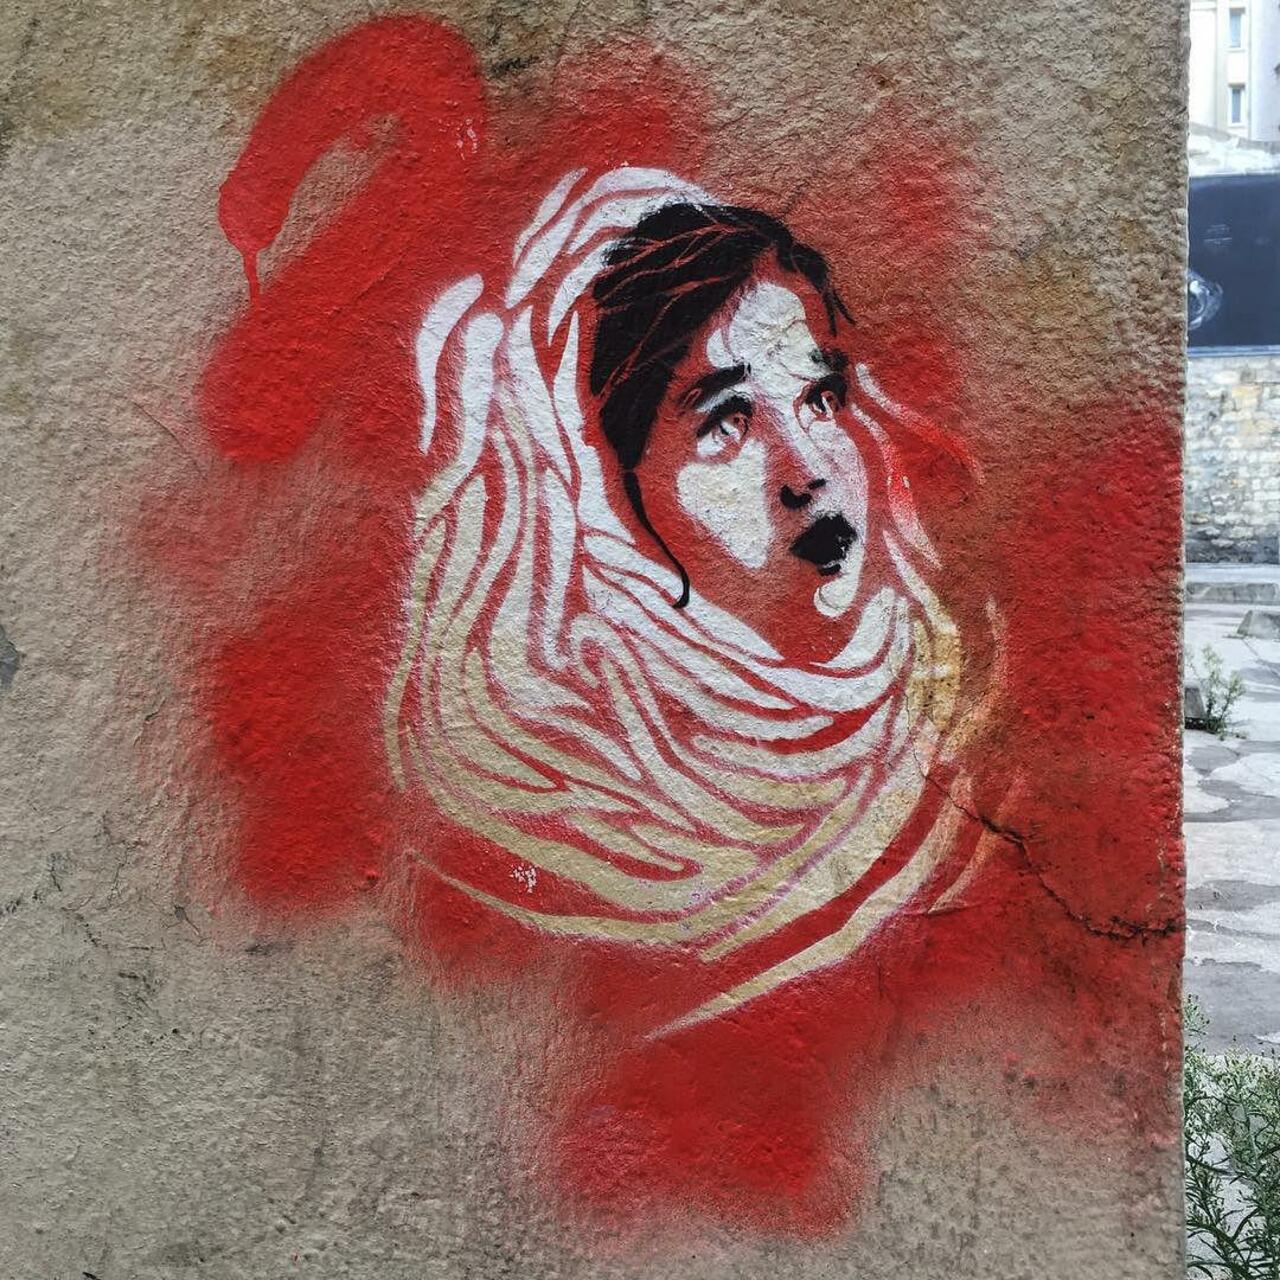 #Paris #graffiti photo by @catscoffeecreativity http://ift.tt/1X7XWCP #StreetArt http://t.co/LABIcJZbc2